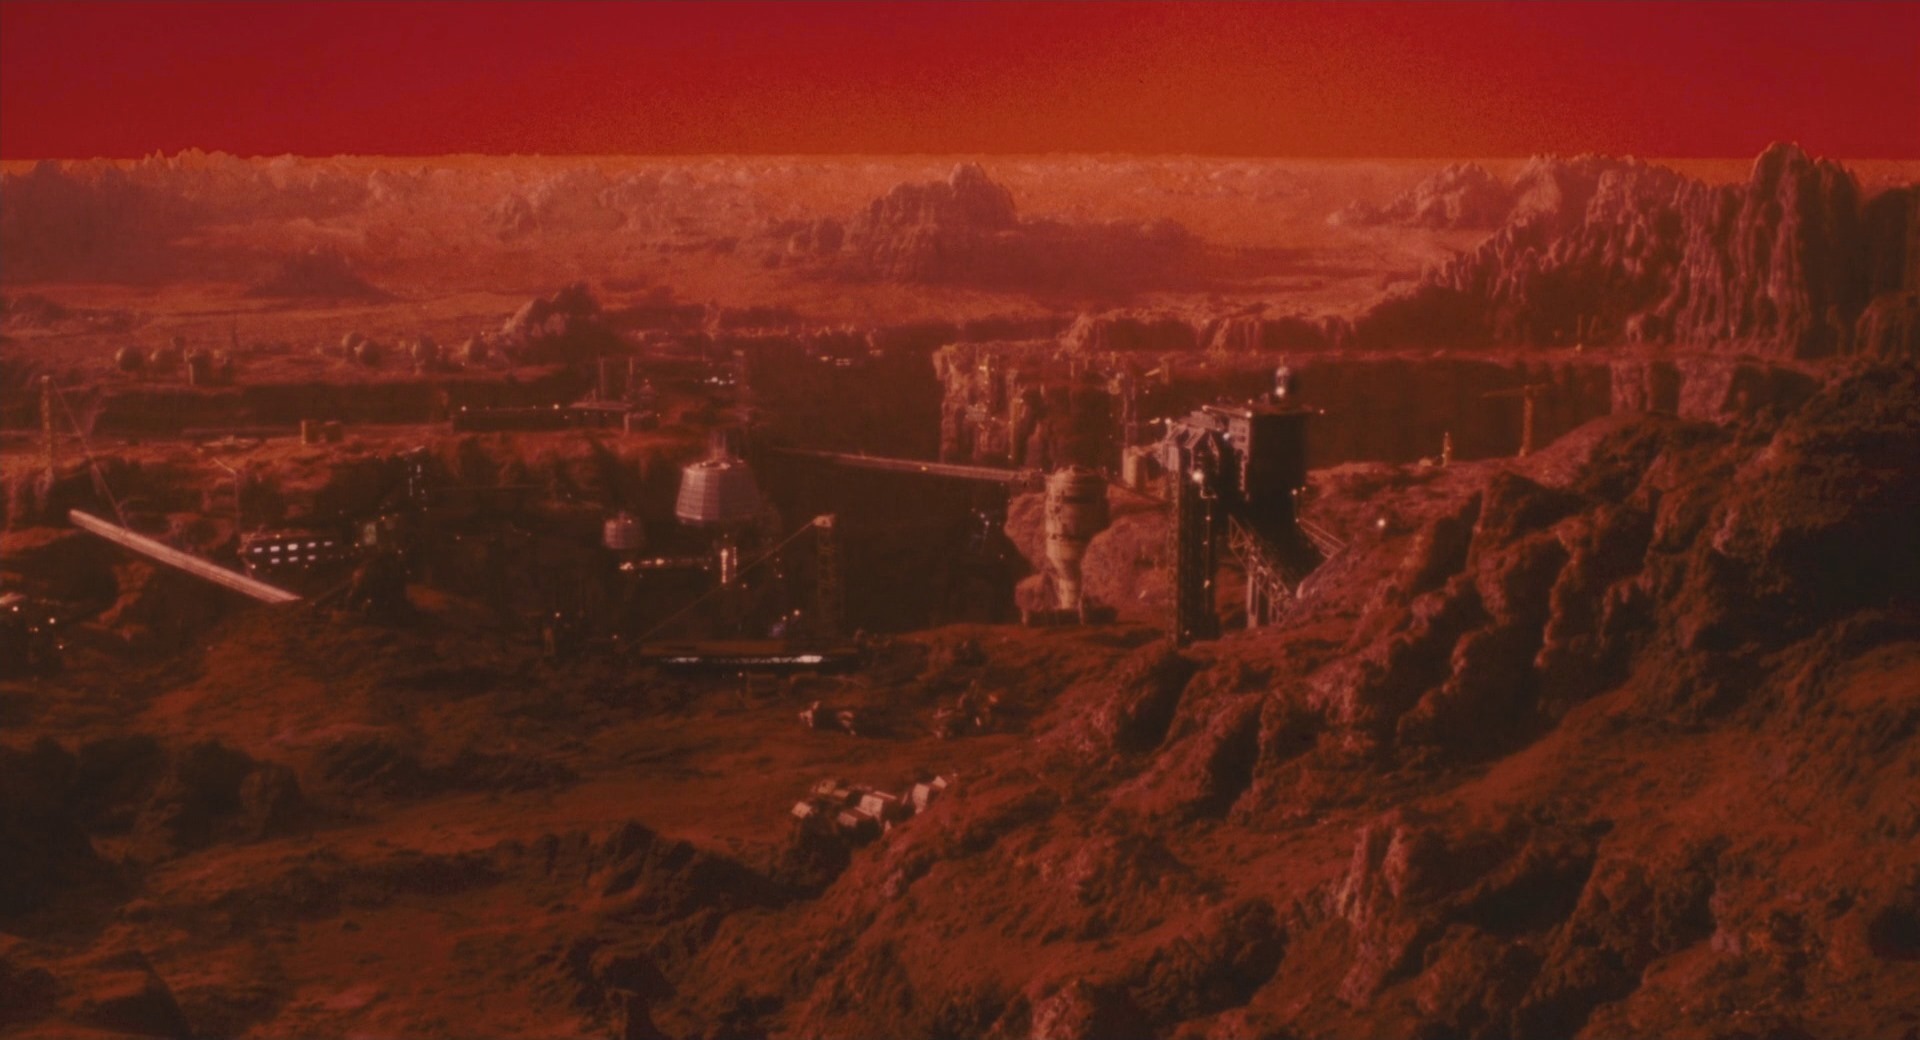 07+Mars+colony+Total+Recall+1990+movie+image.jpg